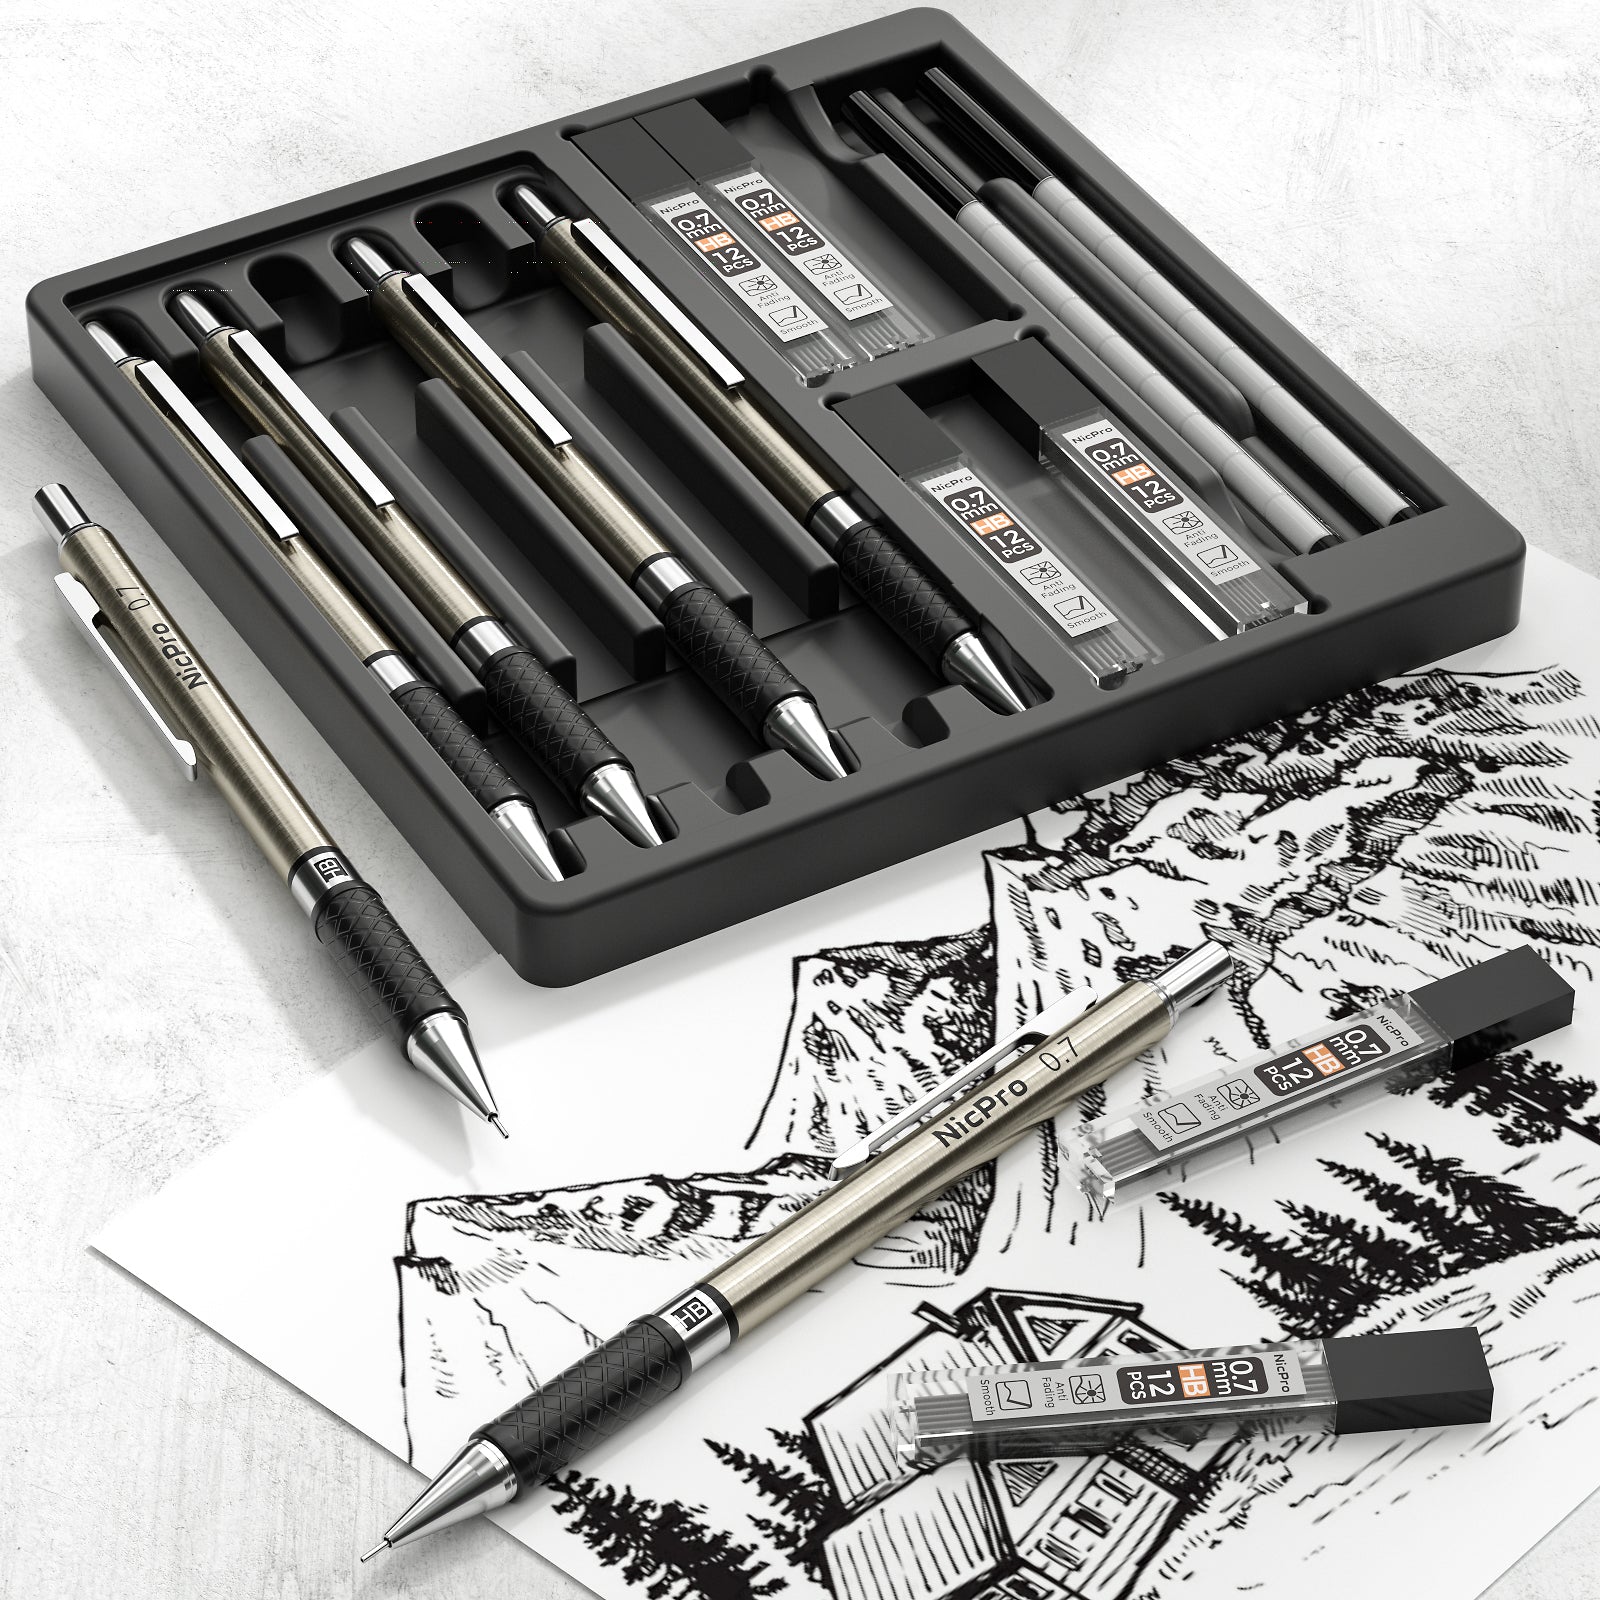 Nicpro 6 PCS Art Mechanical Pencils Set Metal, Artist Drafting Pencil